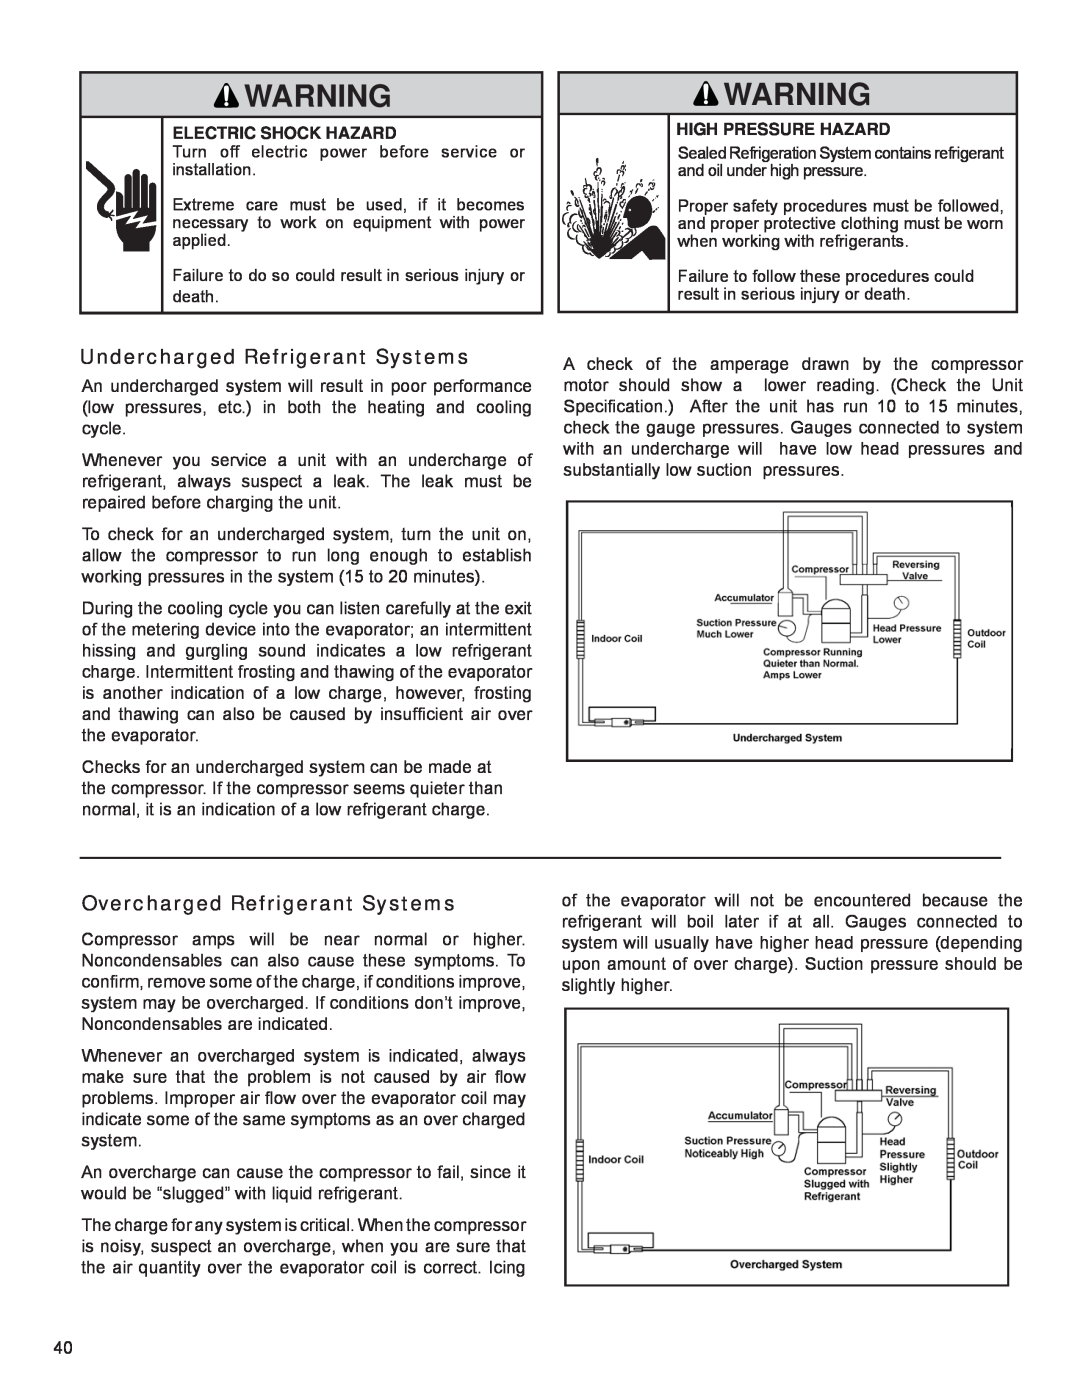 Friedrich R-410A service manual Undercharged Refrigerant Systems, Overcharged Refrigerant Systems, Electric Shock Hazard 